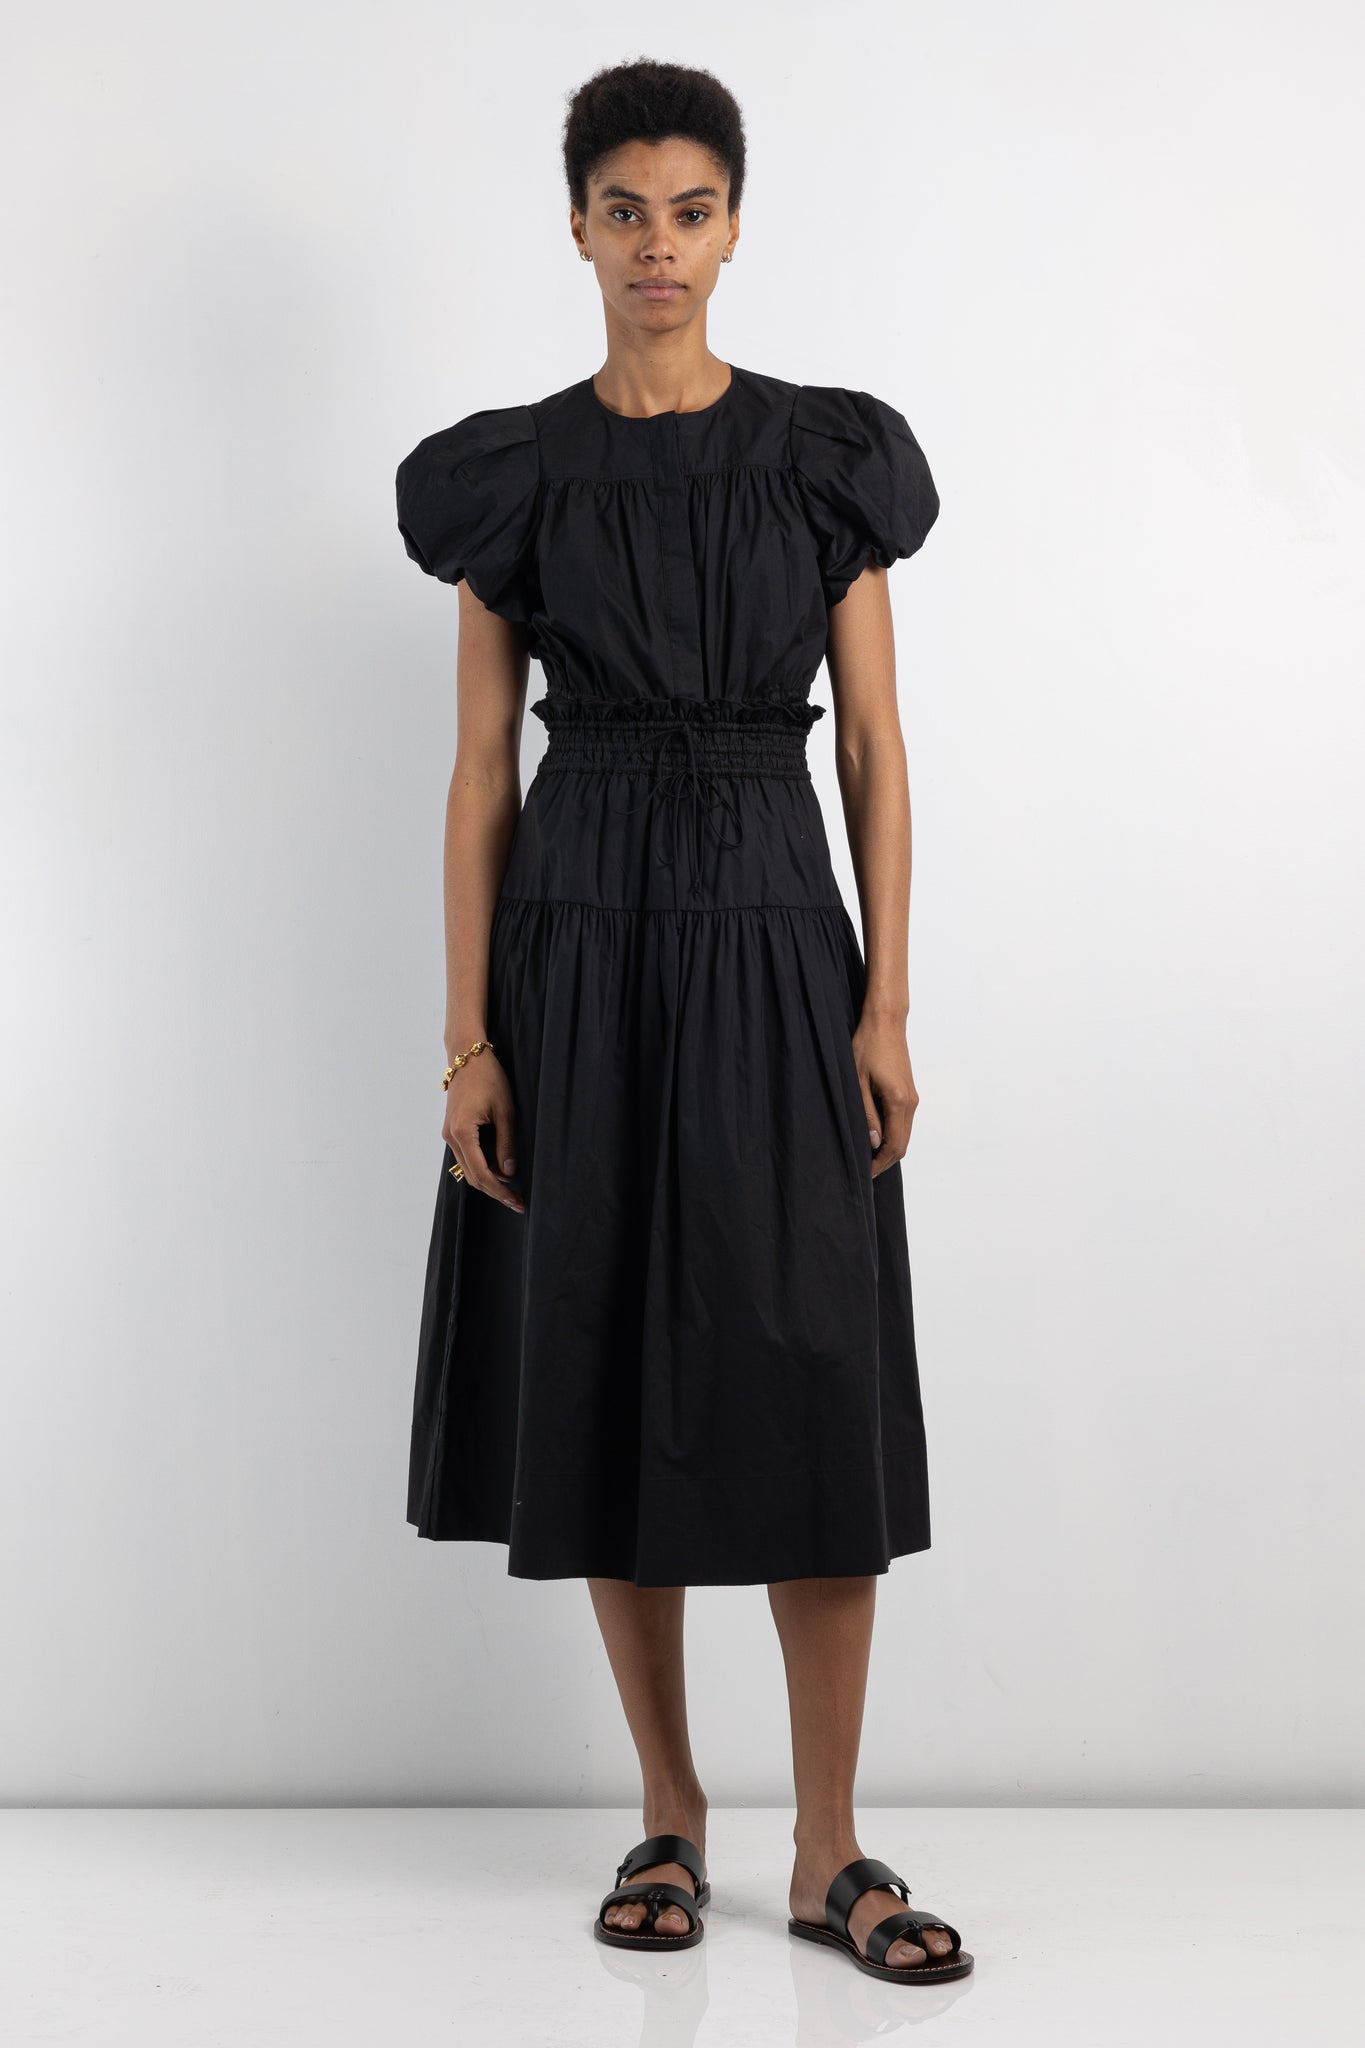 Wmens skirt | Ulla Johnson Kyra skirt | The Standard Store